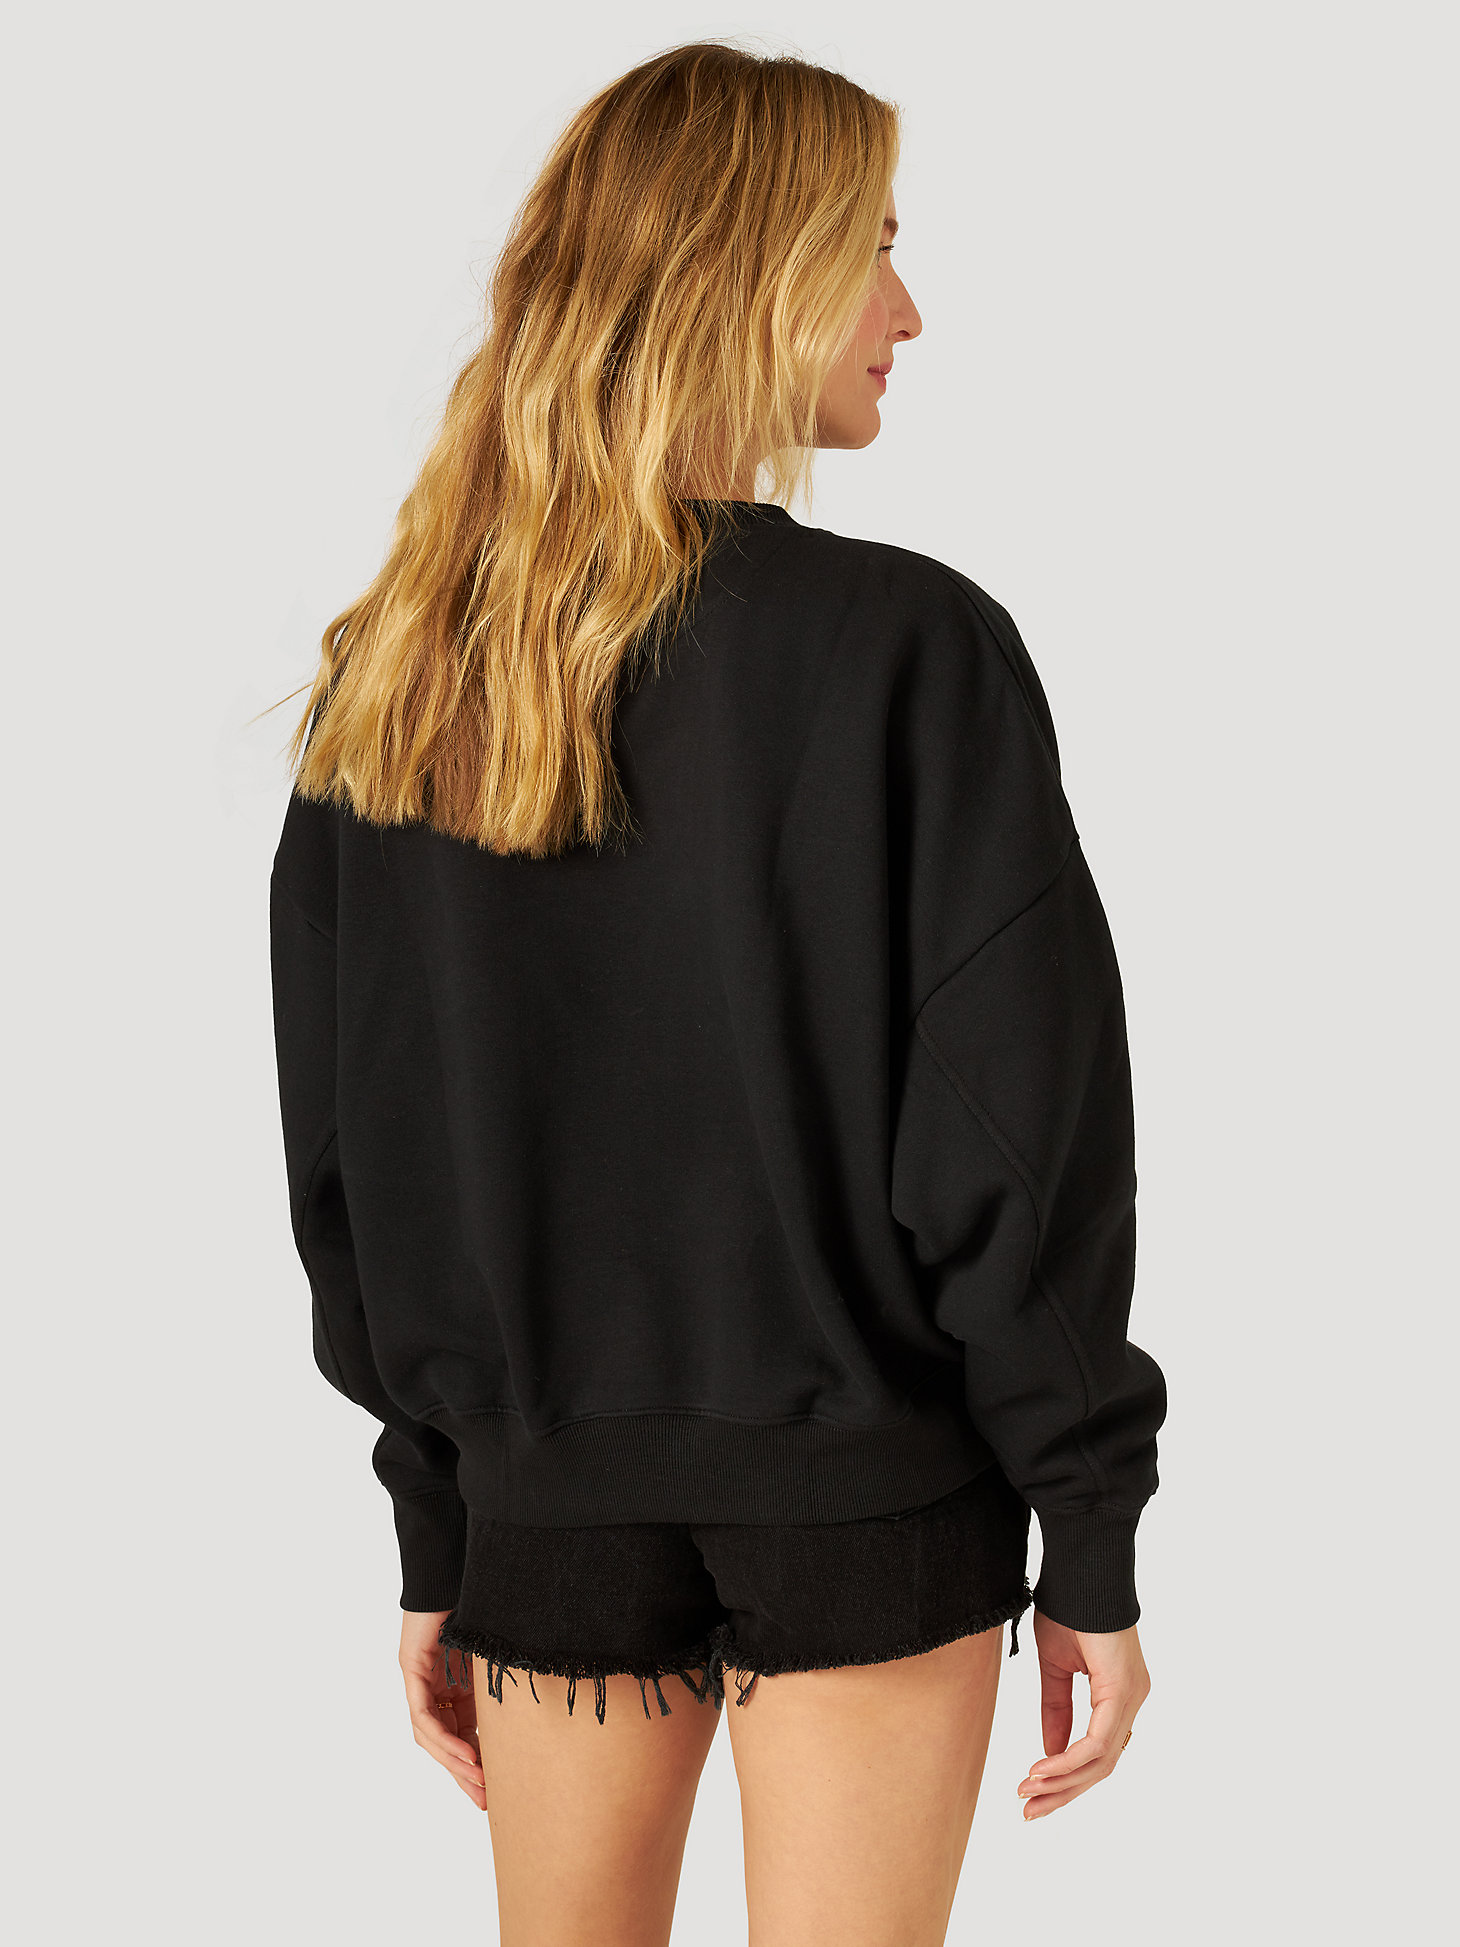 Women's What's Going On Crop Sweatshirt in Worn Black alternative view 1